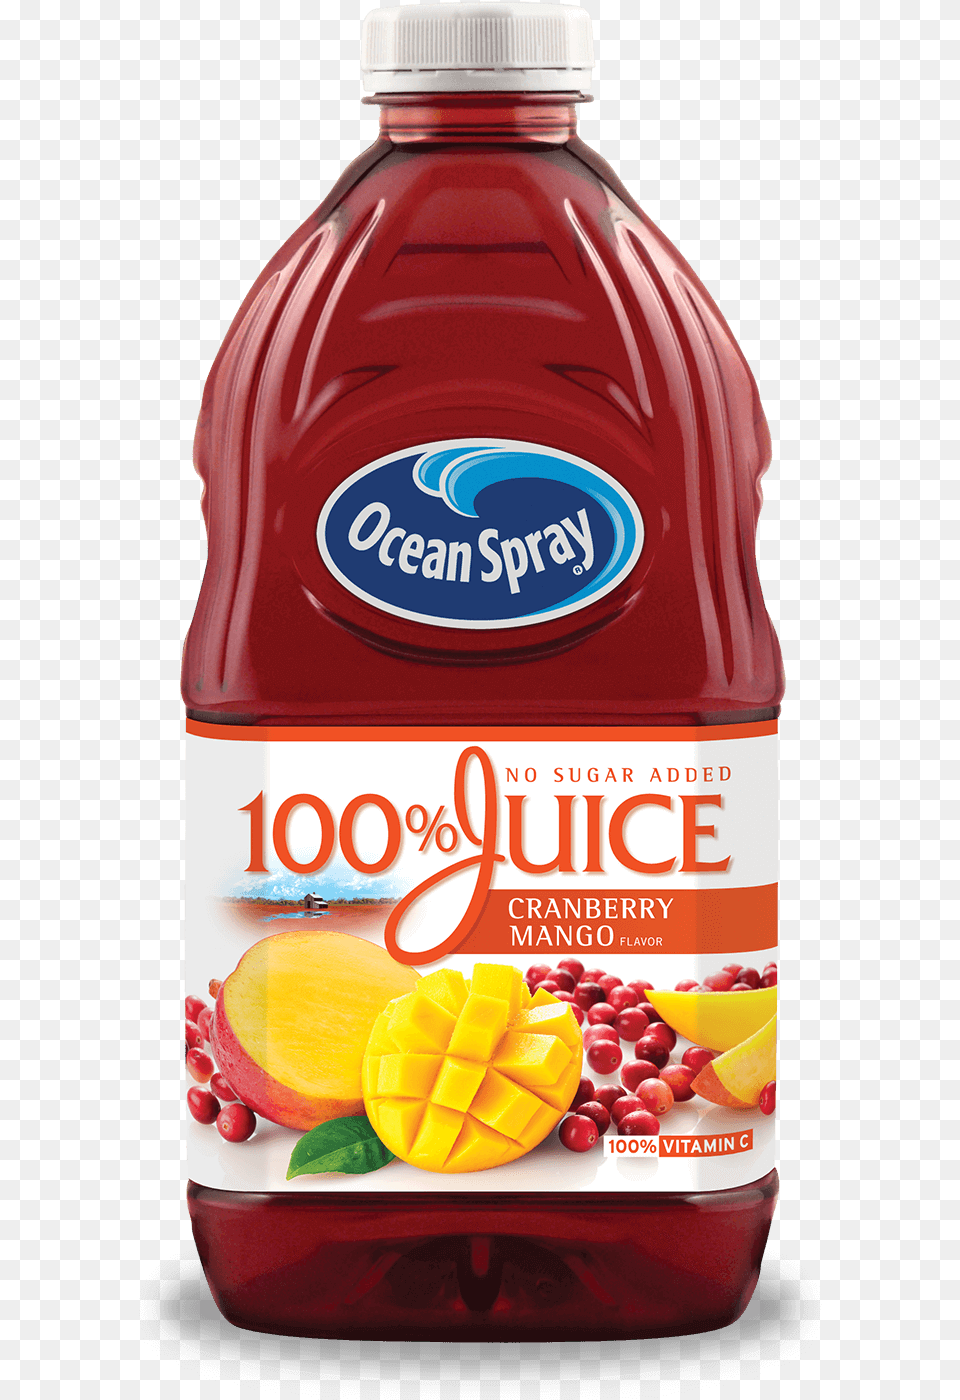 Ocean Spray Ocean Spray Cranberry Mango 100 Juice, Beverage, Ketchup, Ammunition, Grenade Free Png Download